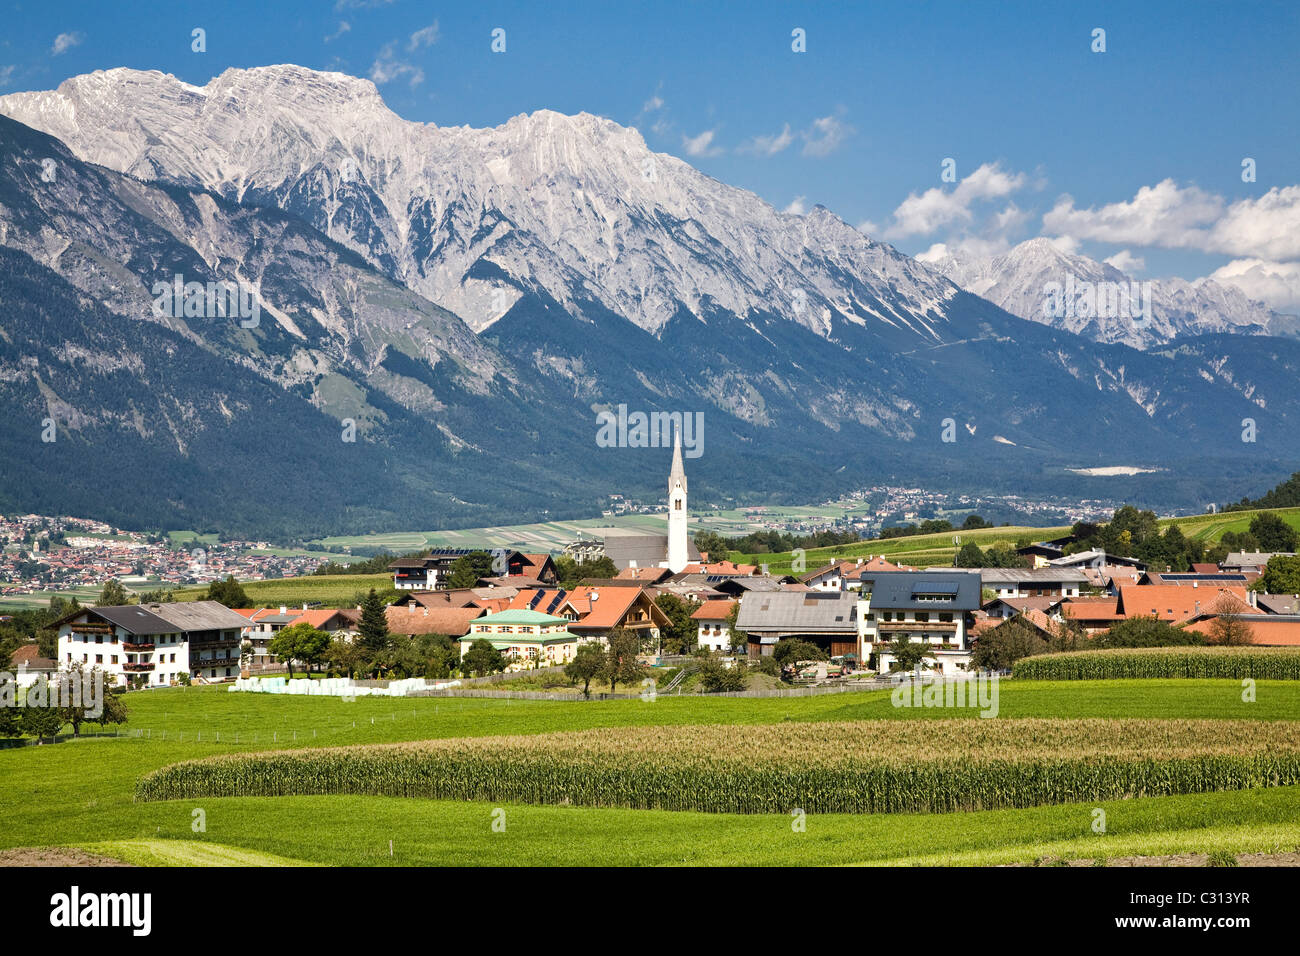 The town of Aldrans near Innsbruck, Austria. Stock Photo